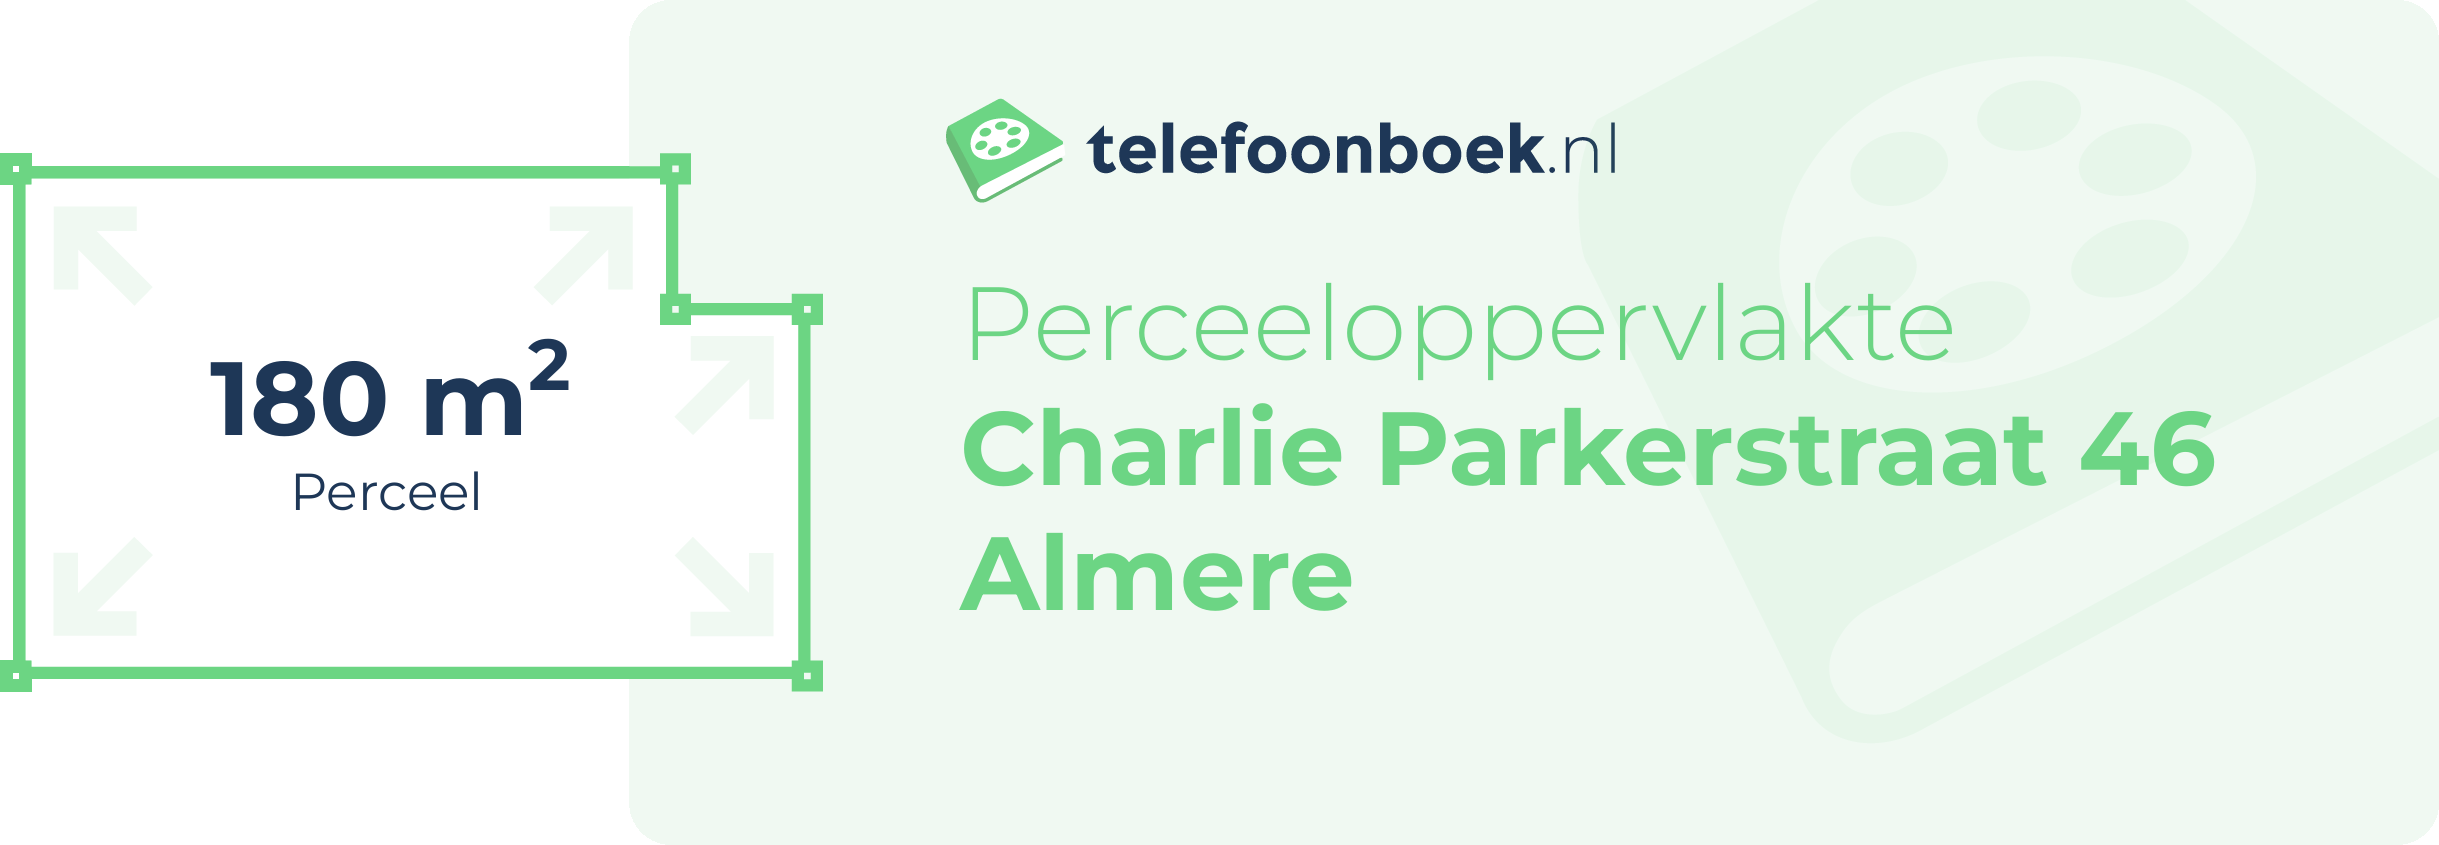 Perceeloppervlakte Charlie Parkerstraat 46 Almere